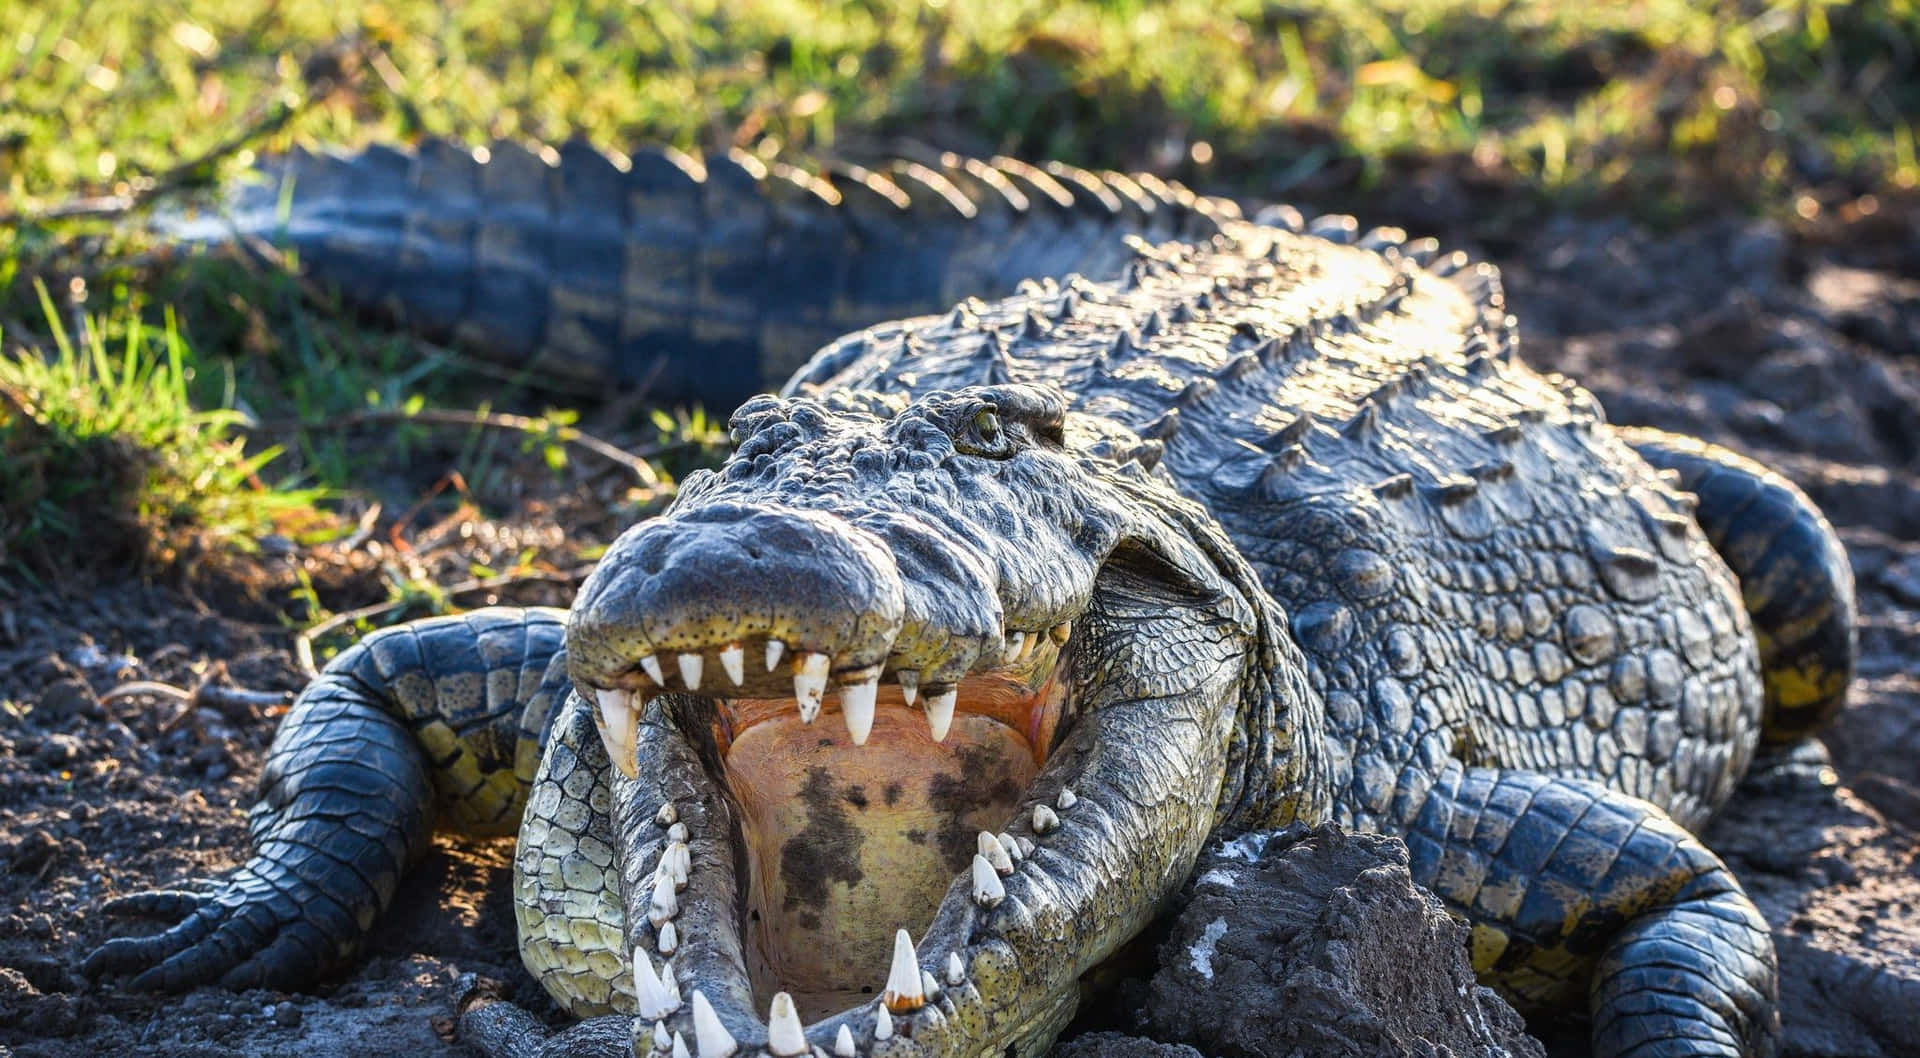 Wild Crocodile Open Mouth Picture